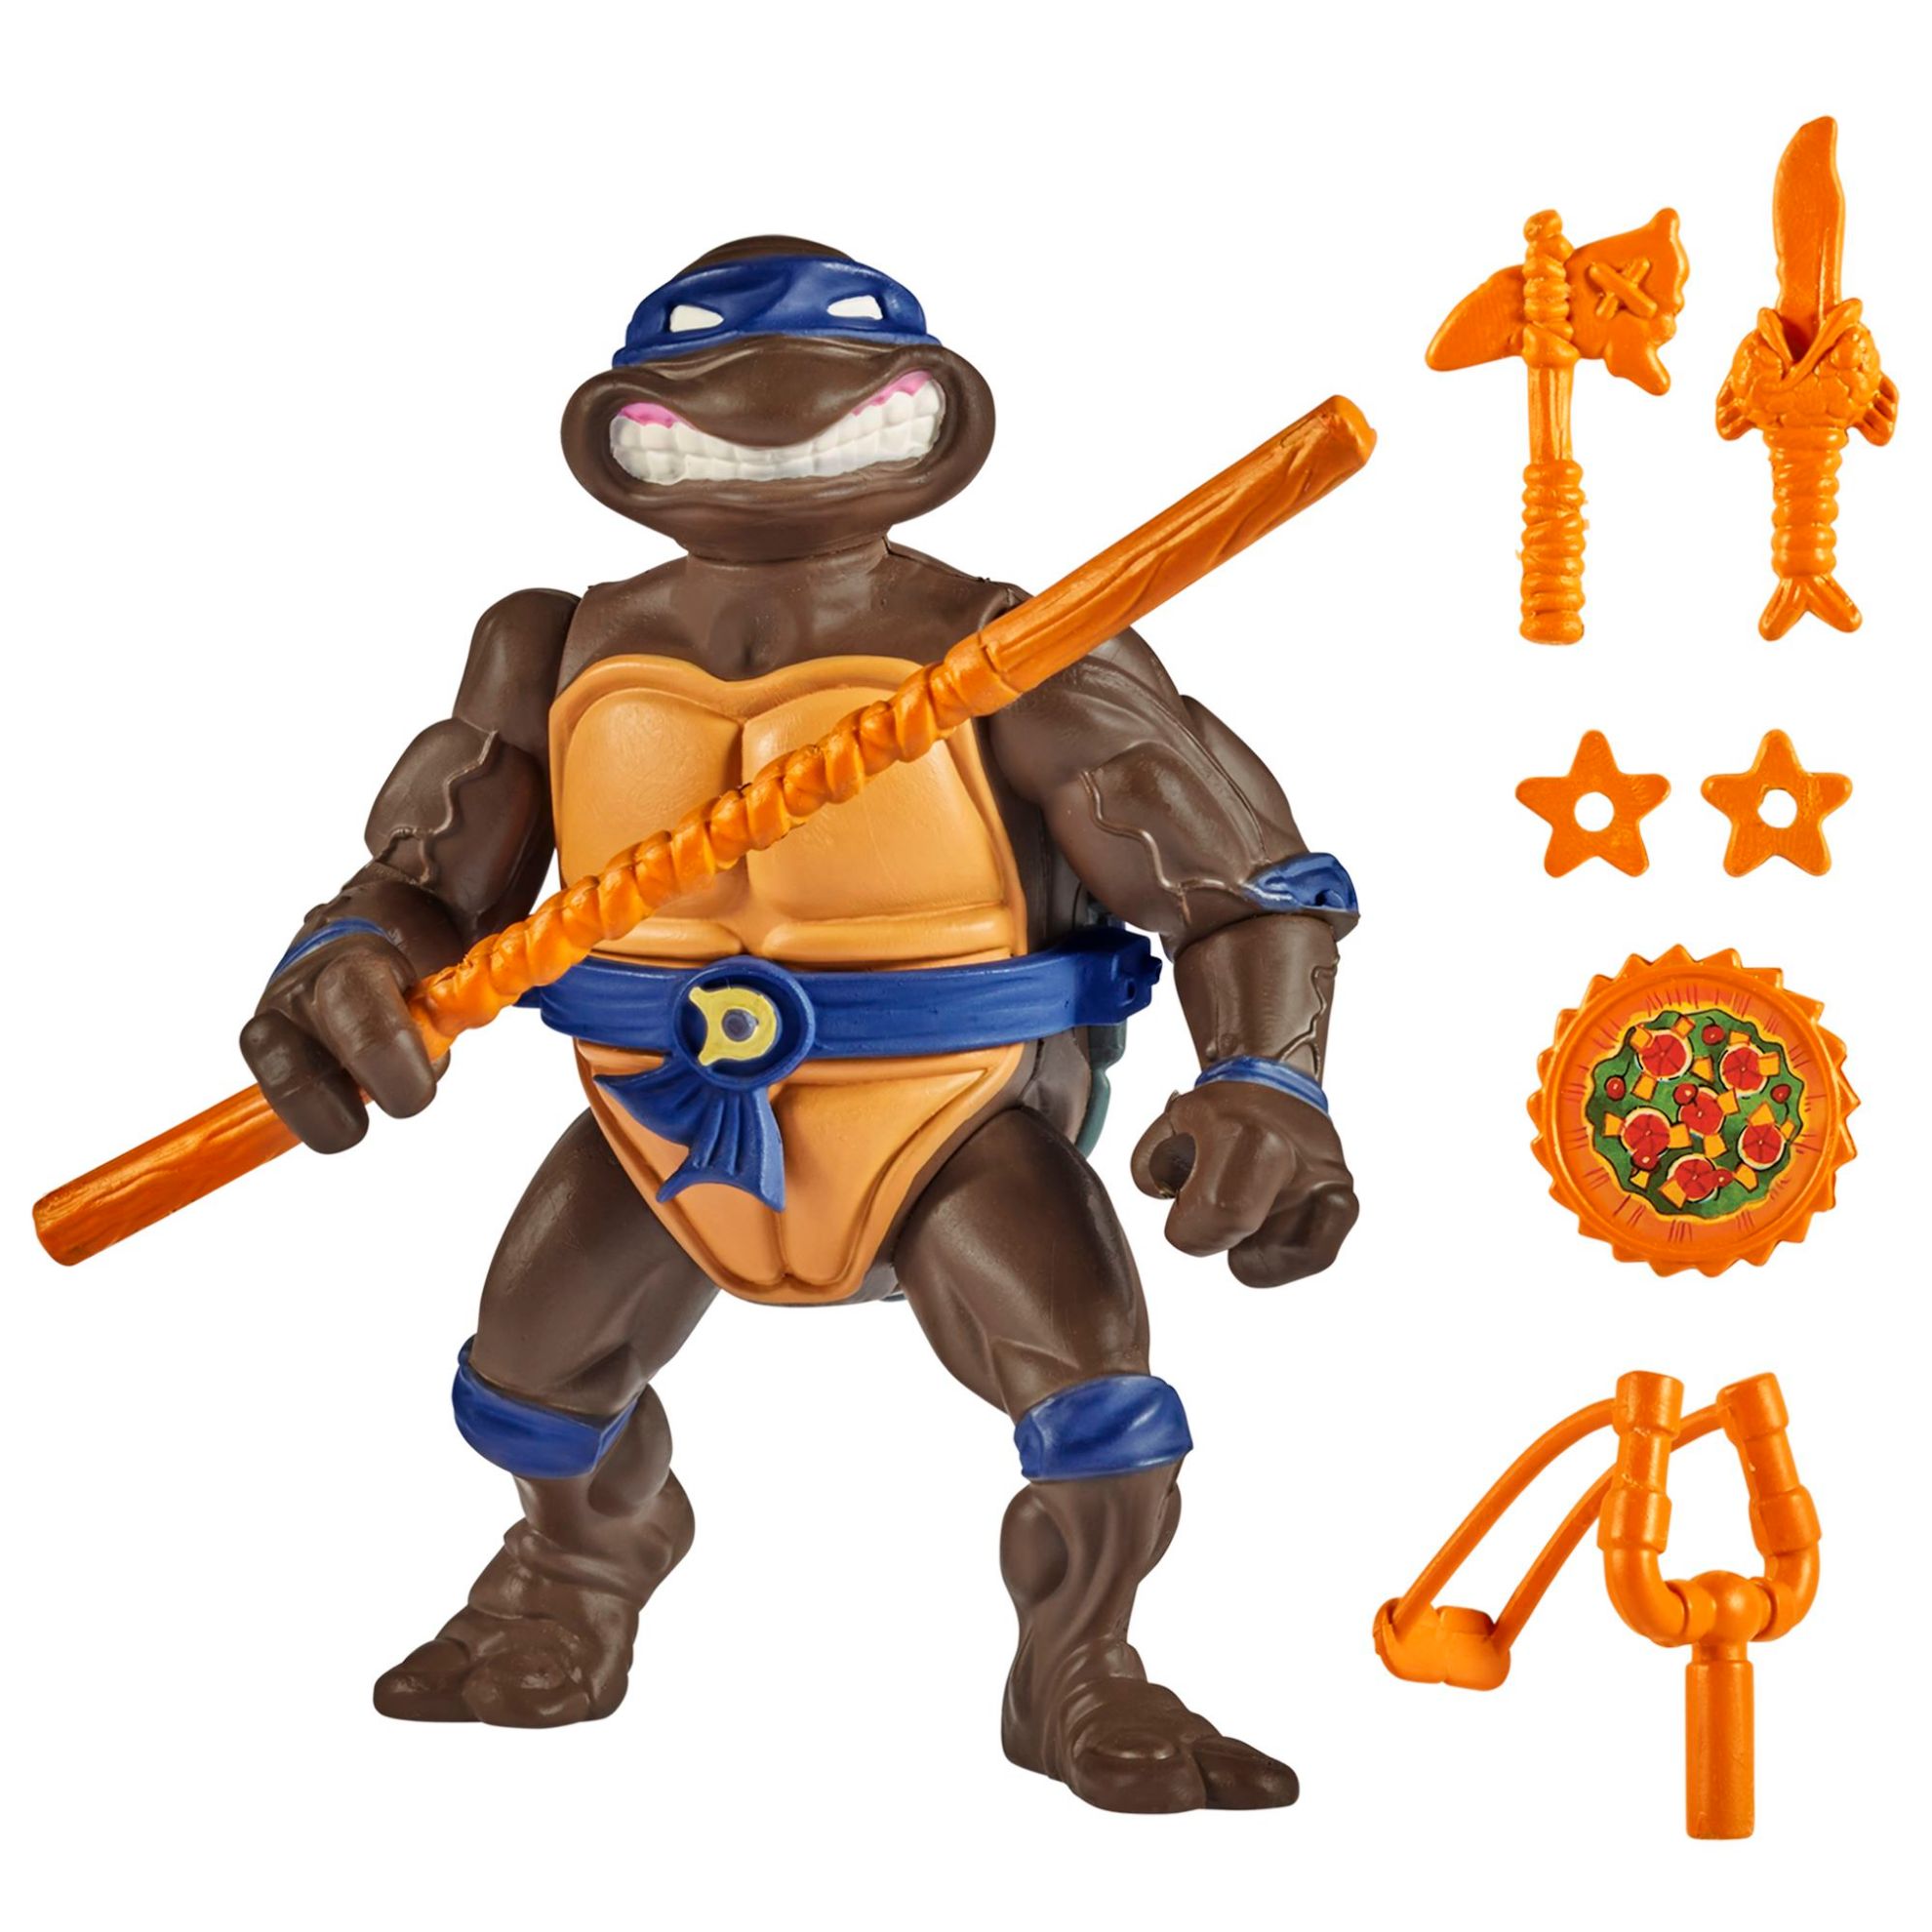 Teenage Mutant Ninja Turtles - Donatello with Storage Shell